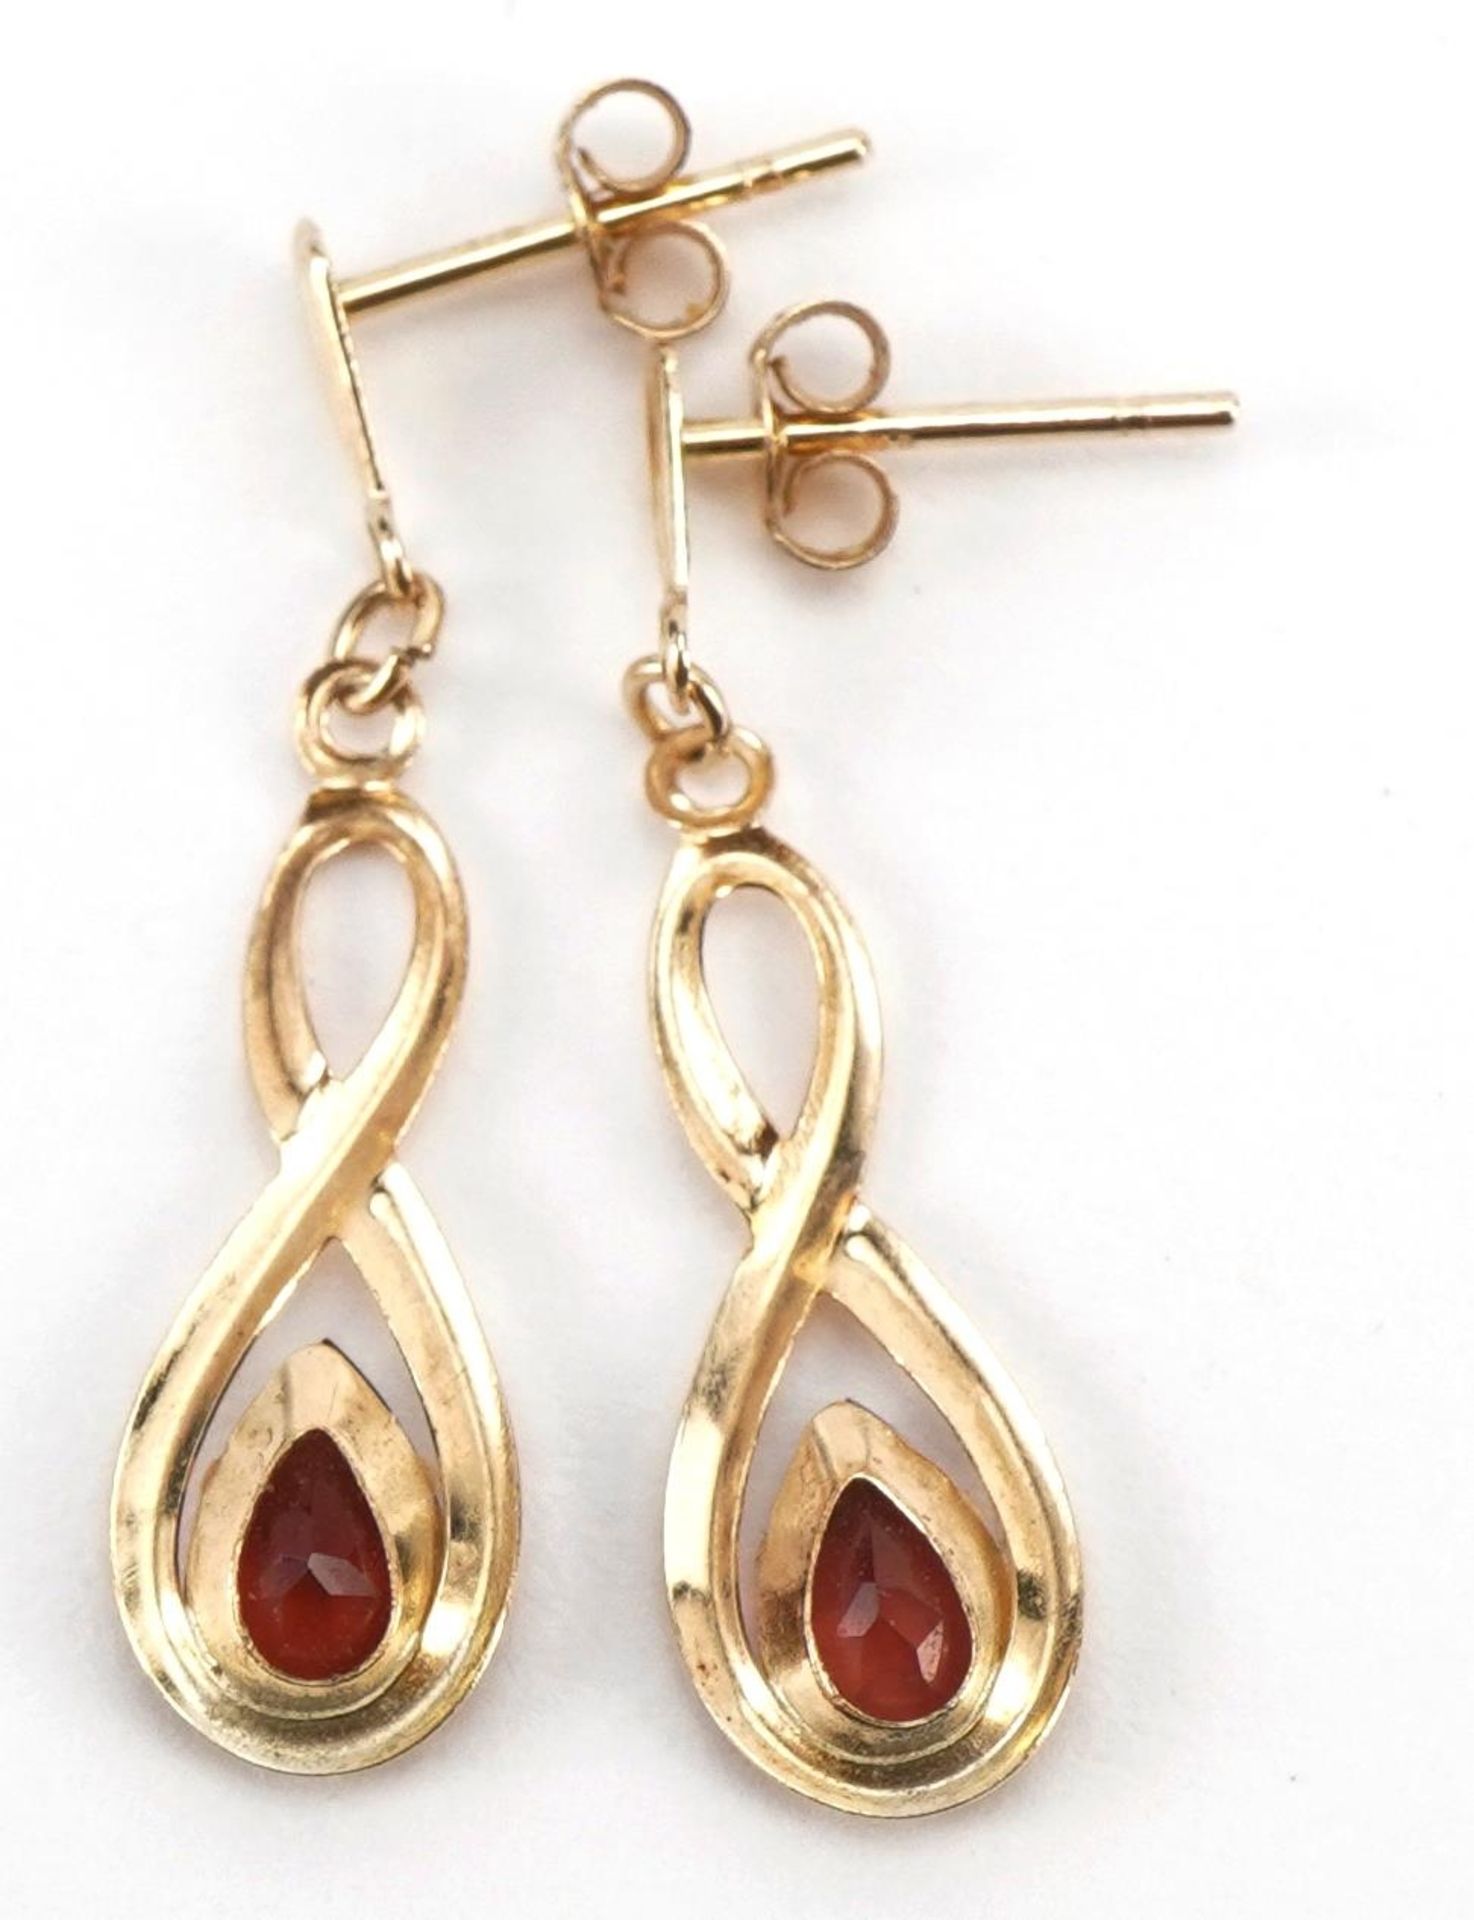 Pair of 9ct gold garnet infinity drop earrings, 2.5cm high, 0.6g - Image 2 of 2